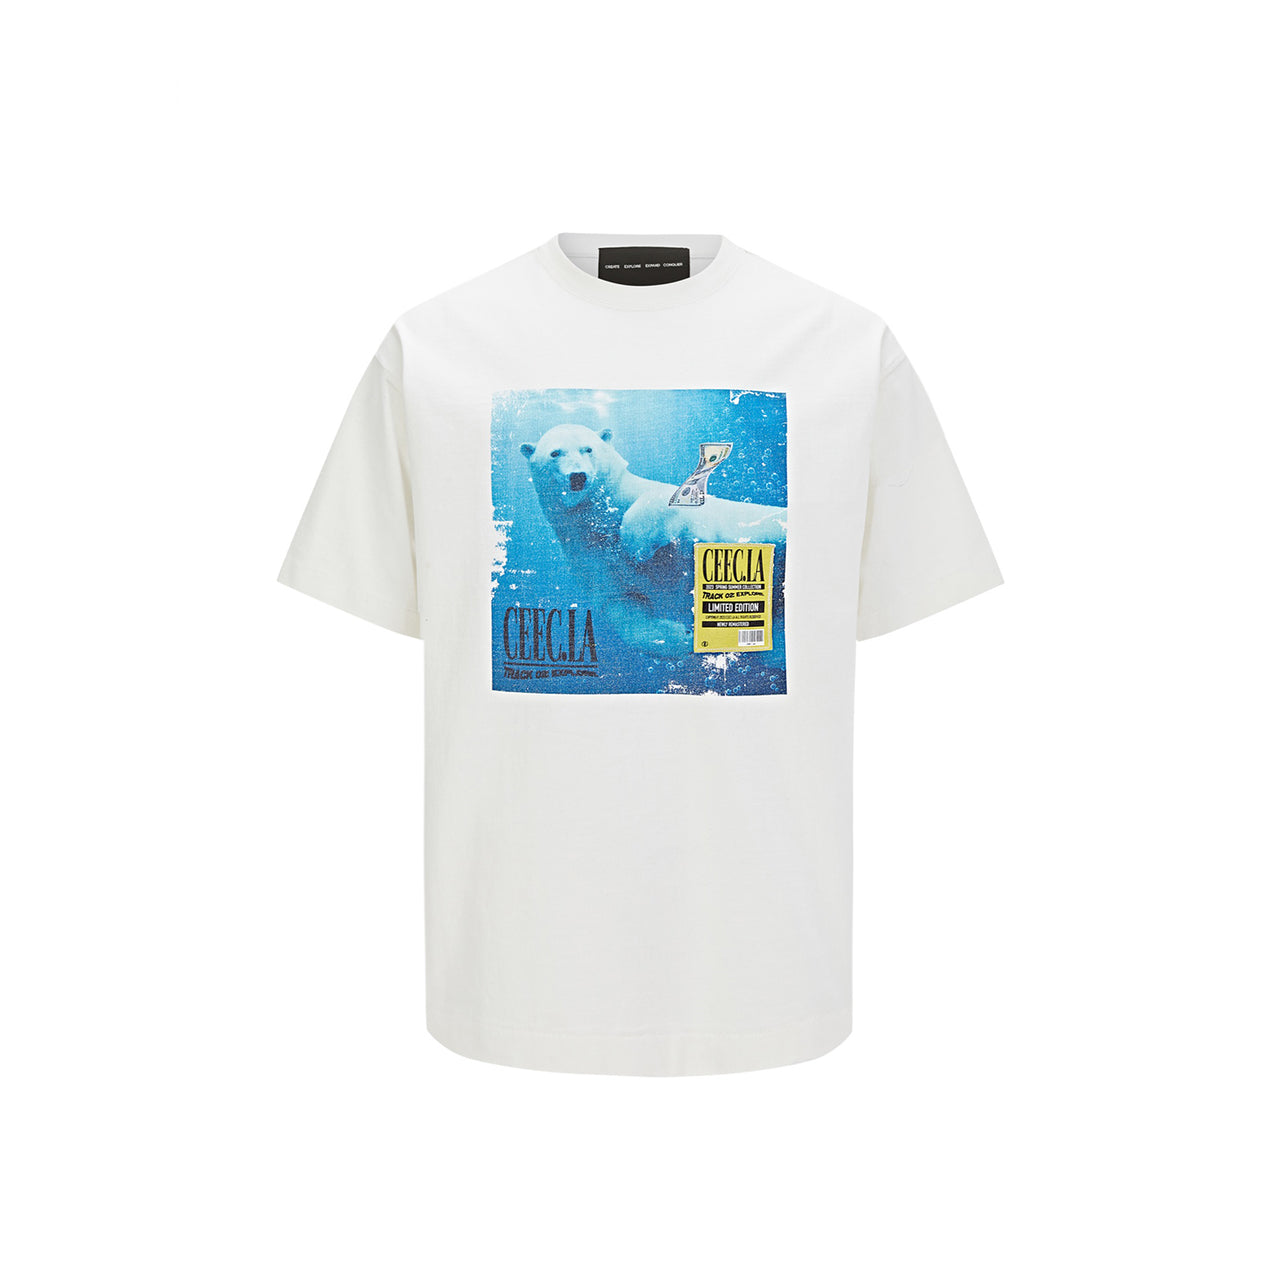 Nirvana Album Cover T-shirt in White